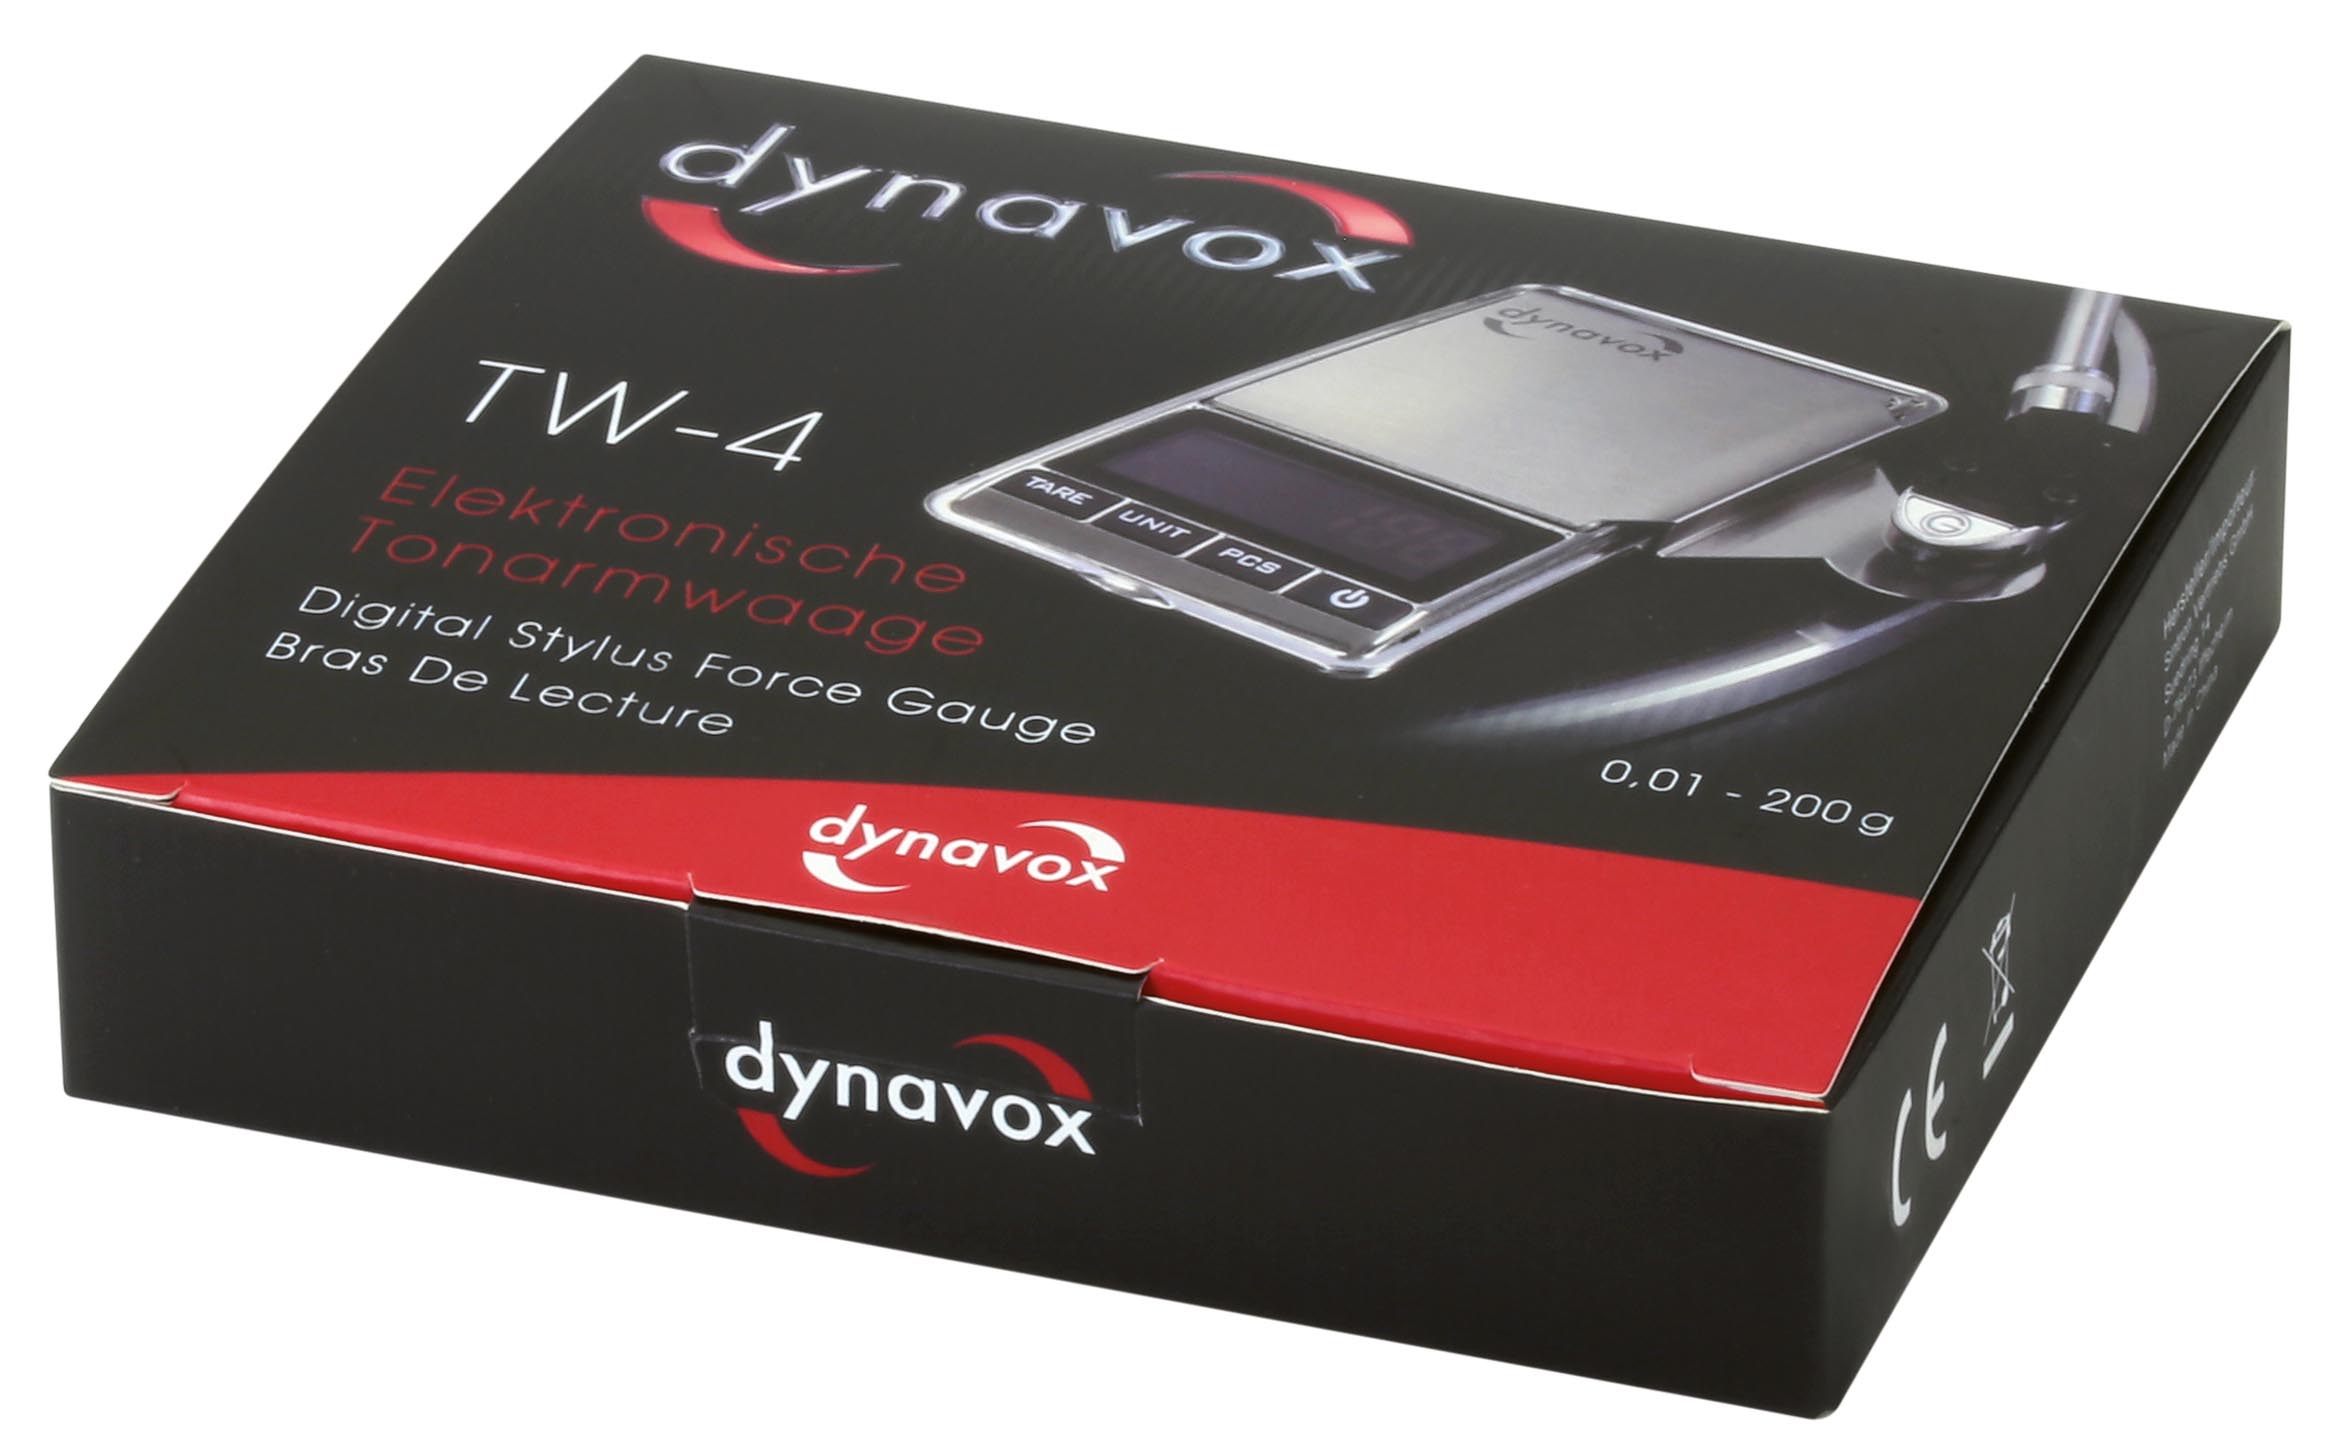 Dynavox Tonarmwaage TW-4, Packshot.